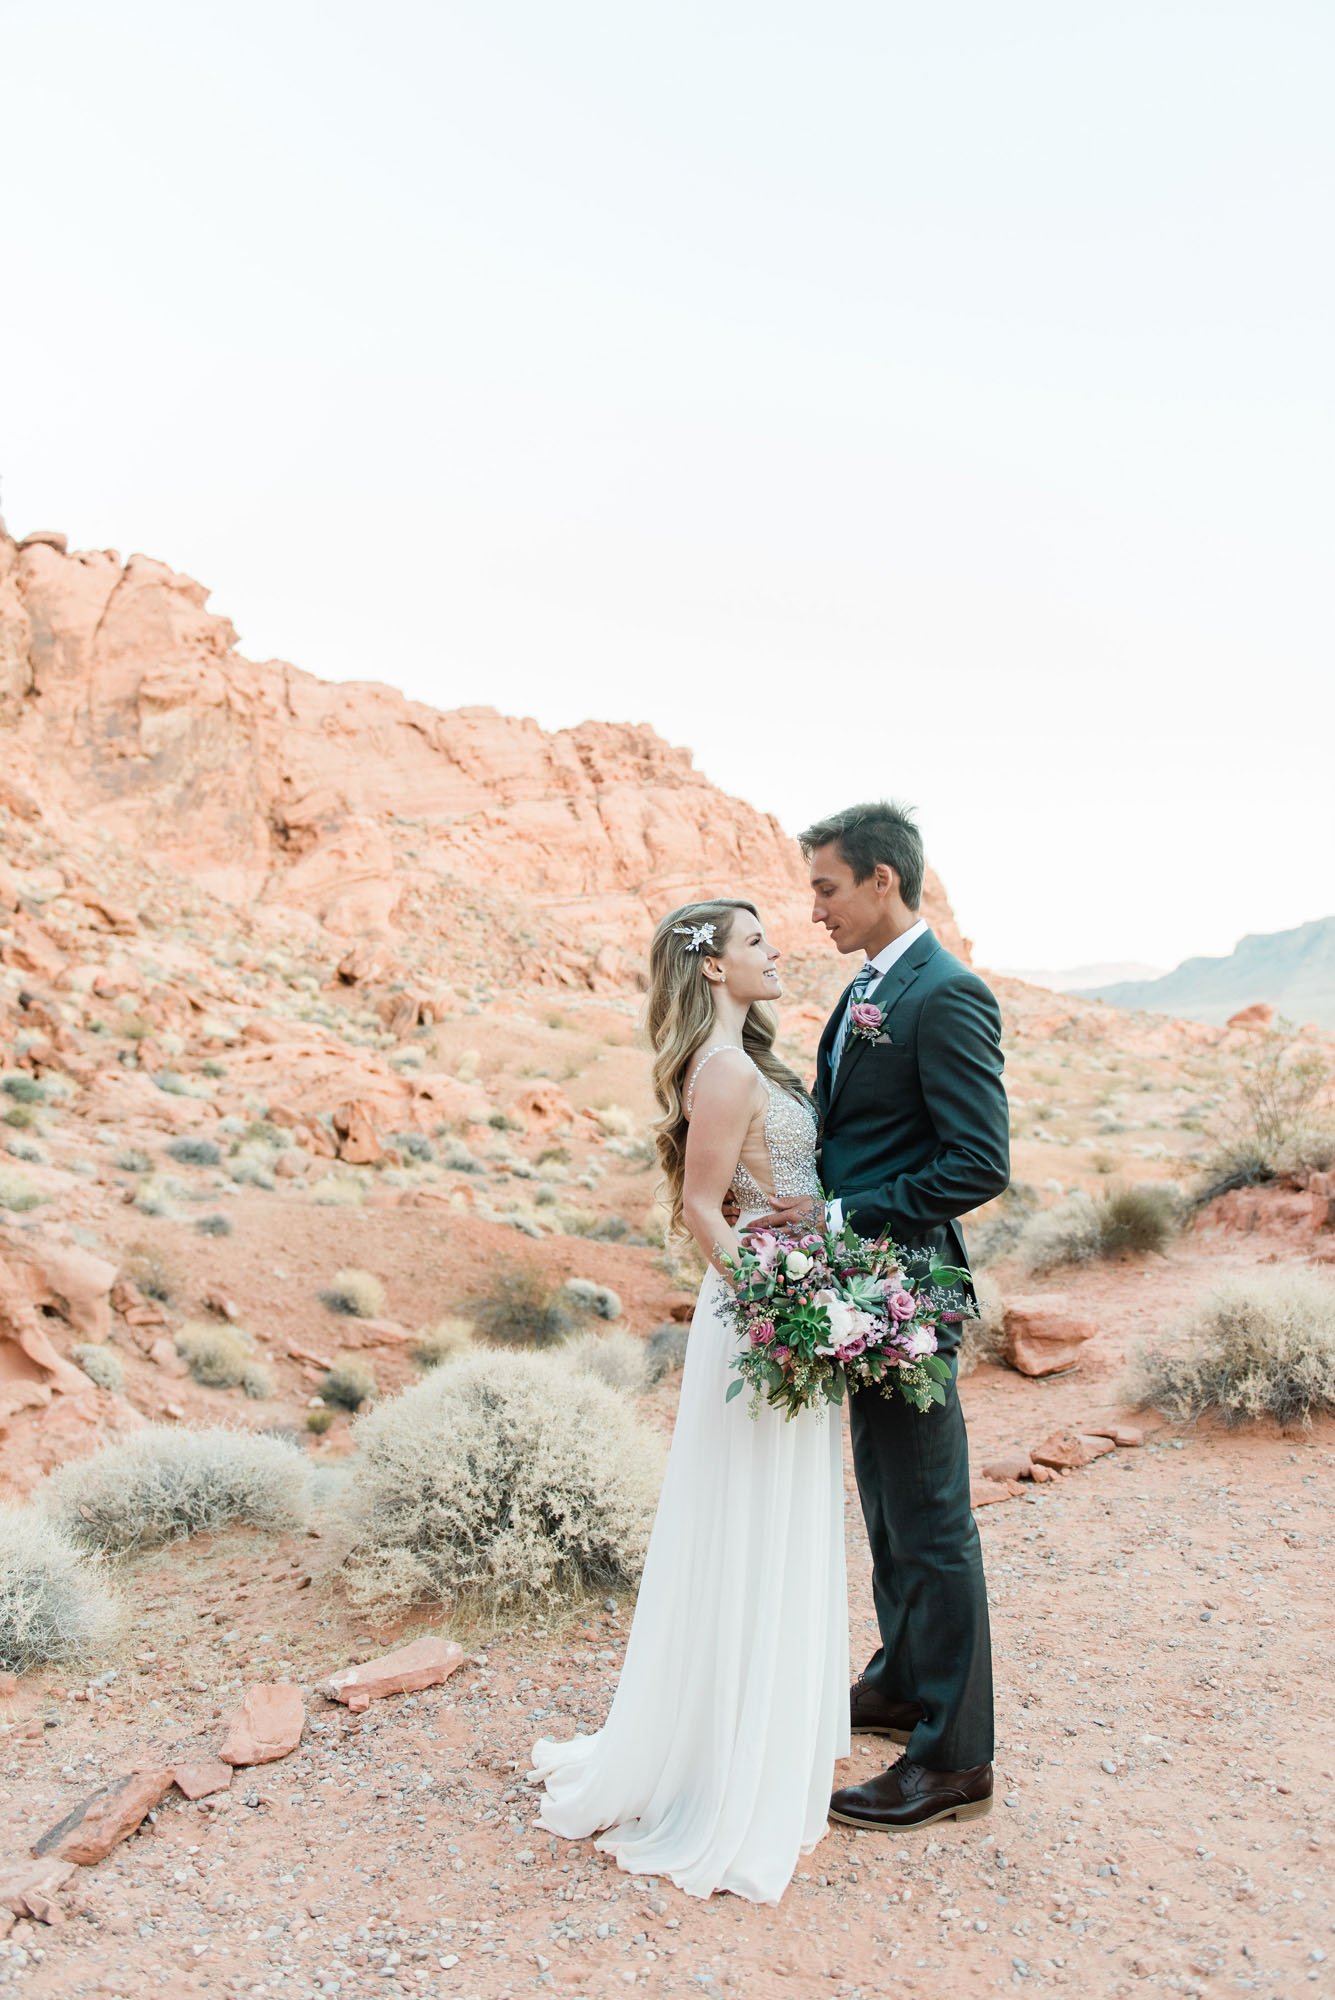 Julie + Daniil: A Real Wedding in Valley of Fire